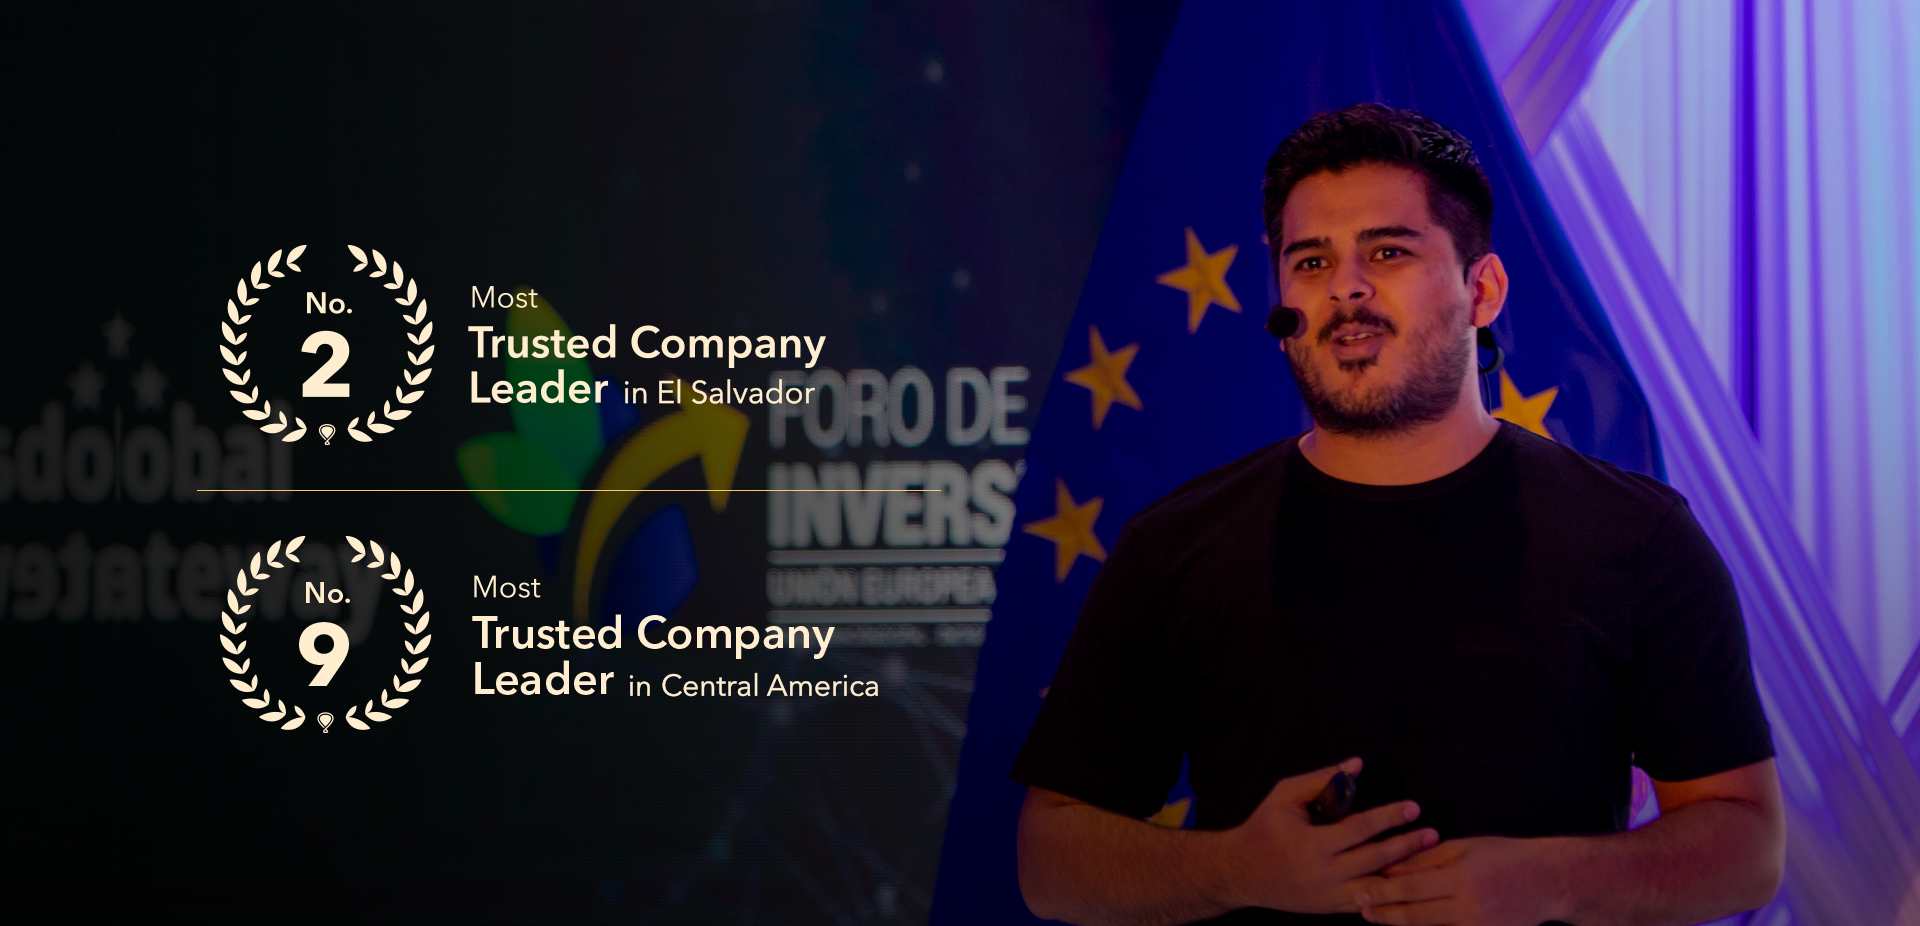 Elaniin's CEO, Adrián Goméz is recognized as the number 2 most trusted company leader in El Salvador and the number 9 most trusted company leader in Central America by Estrategia y Negocio Magazine 